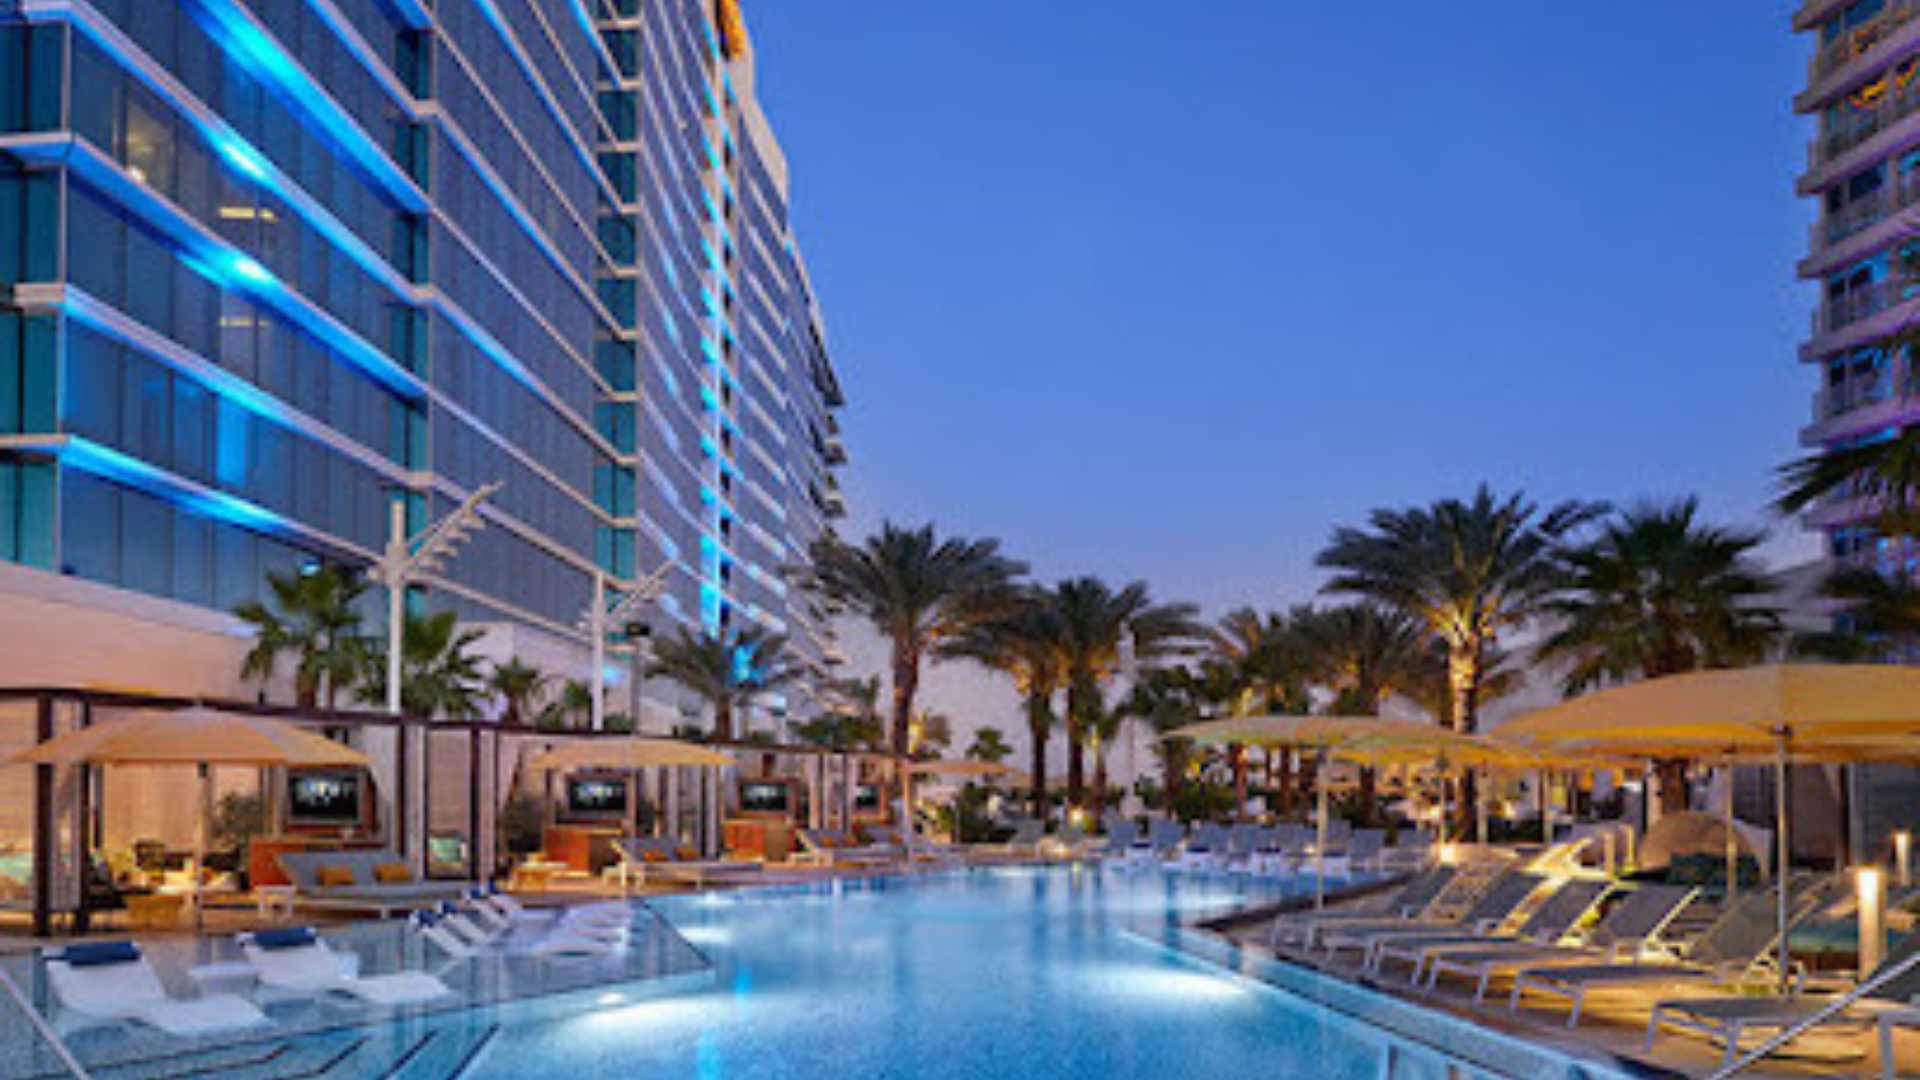 Seminole Hard Rock Hotel & Casino Tampa<br />
